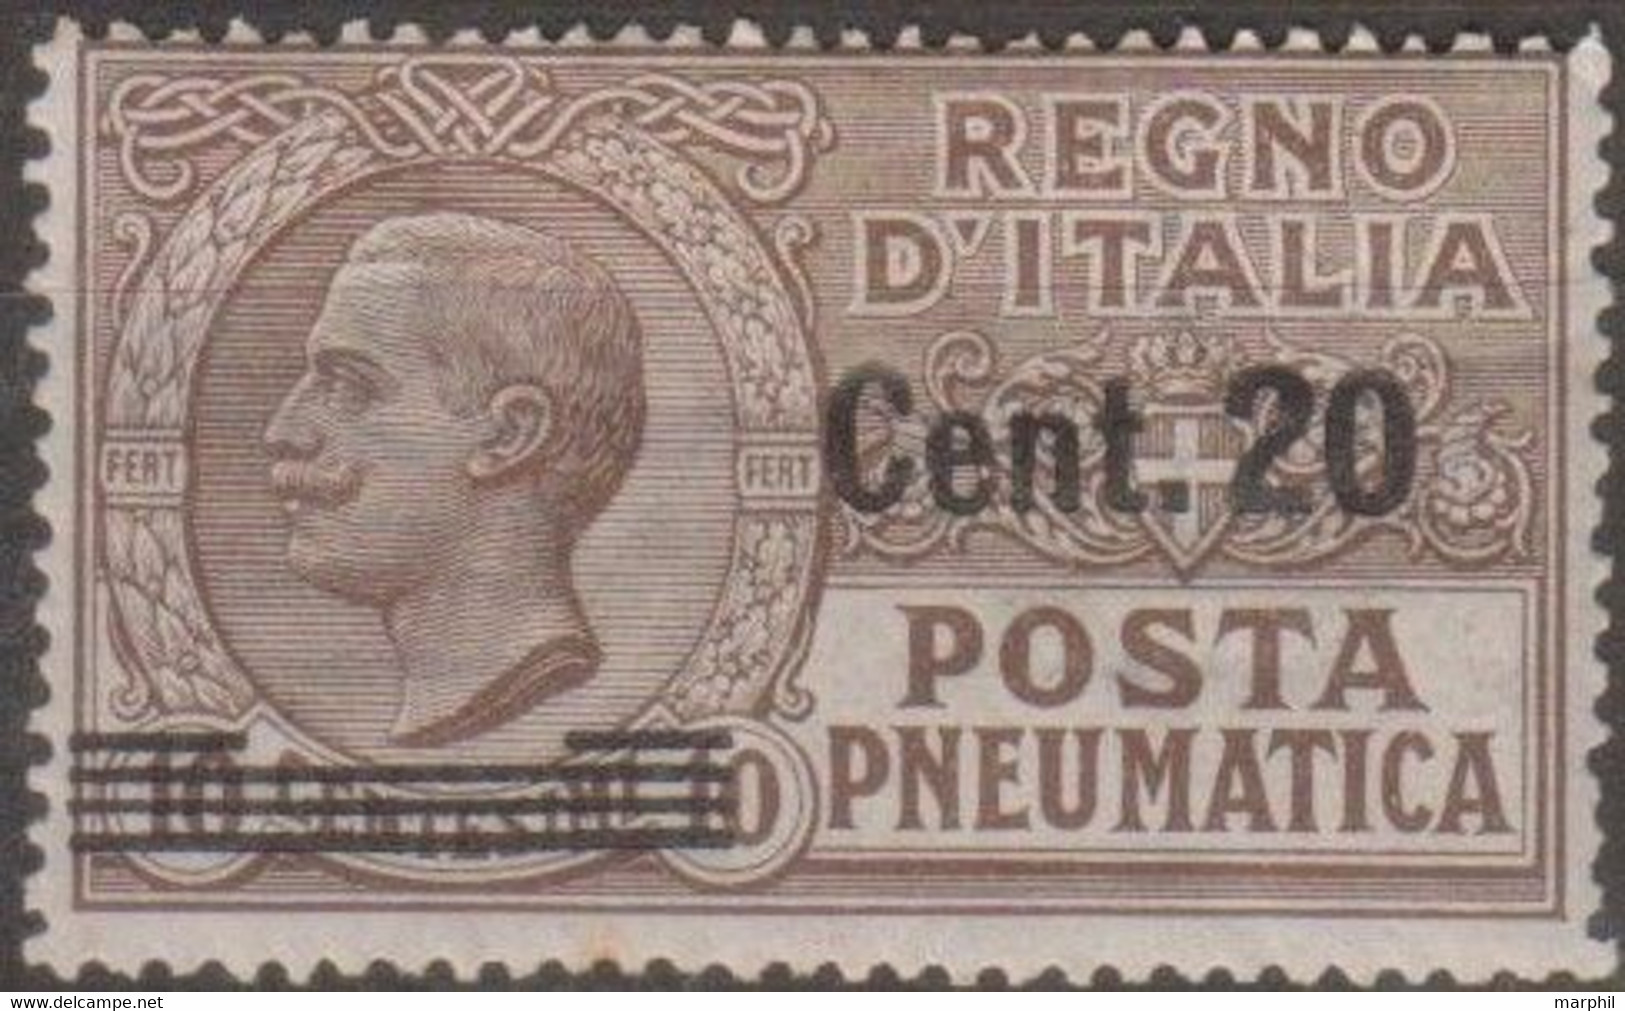 Italia 1924 Posta Pneumatica UnN°PN5 MH/* Cent 20/10 - Poste Pneumatique